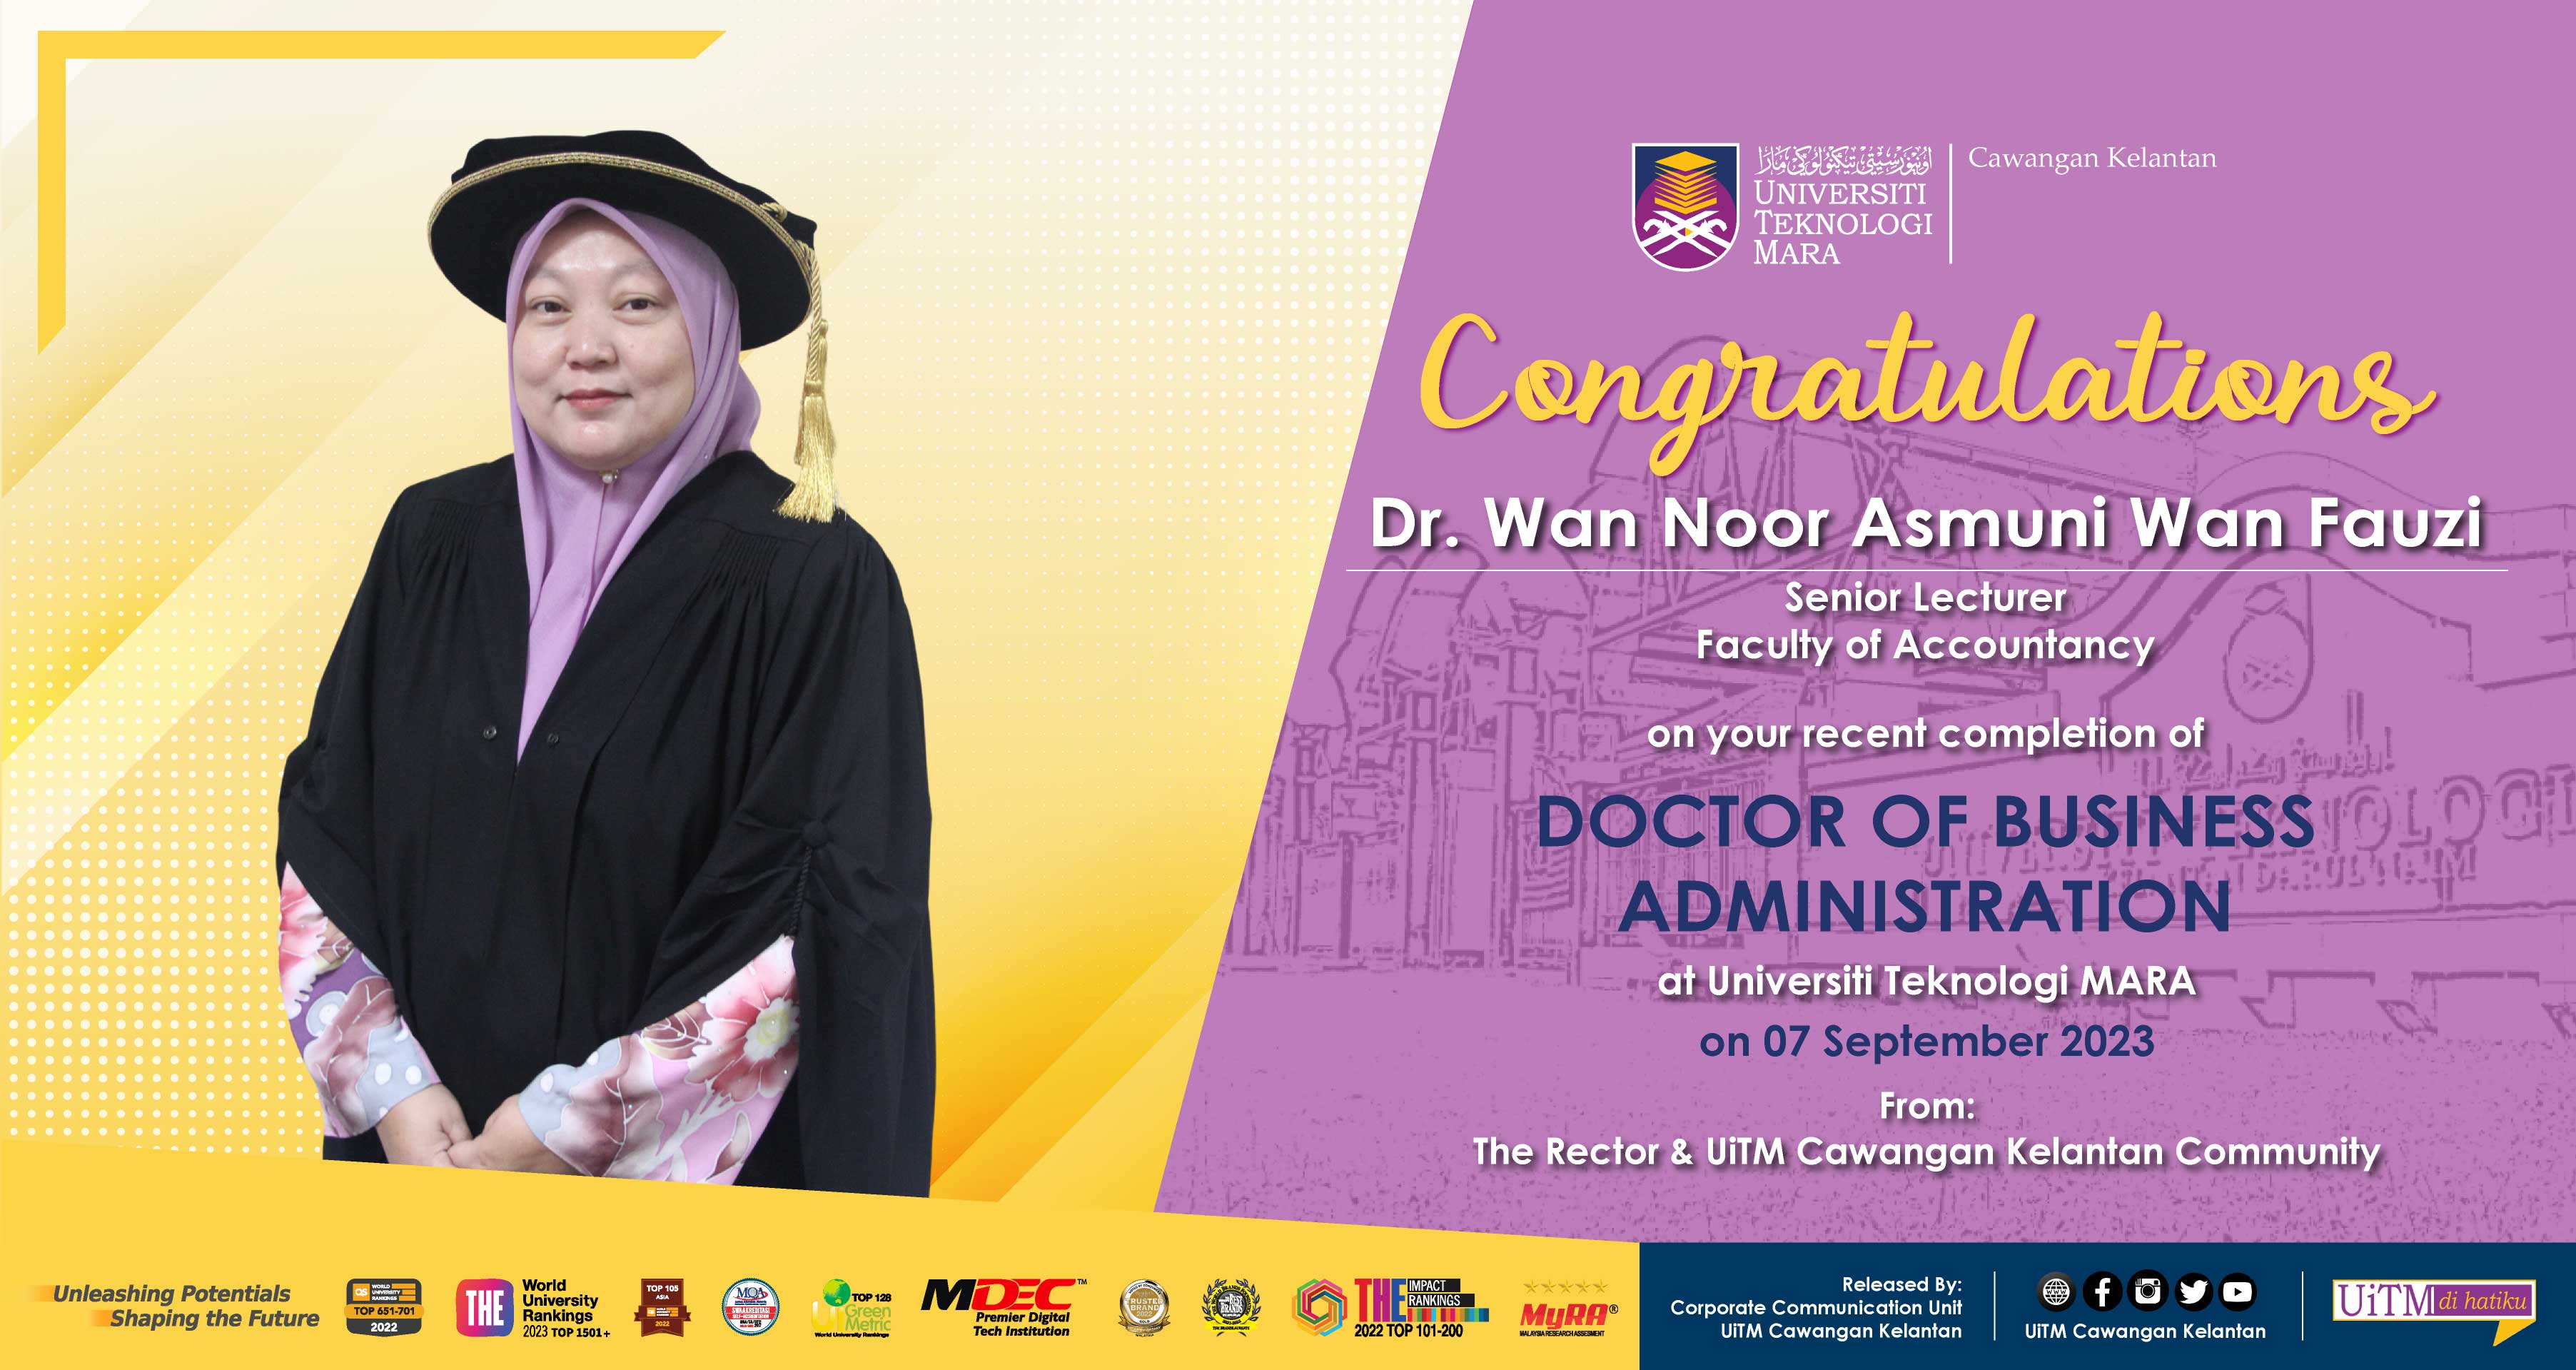 Congratulations!!! Dr. Wan Noor Asmuni Wan Fauzi, Doctor of Business Administration